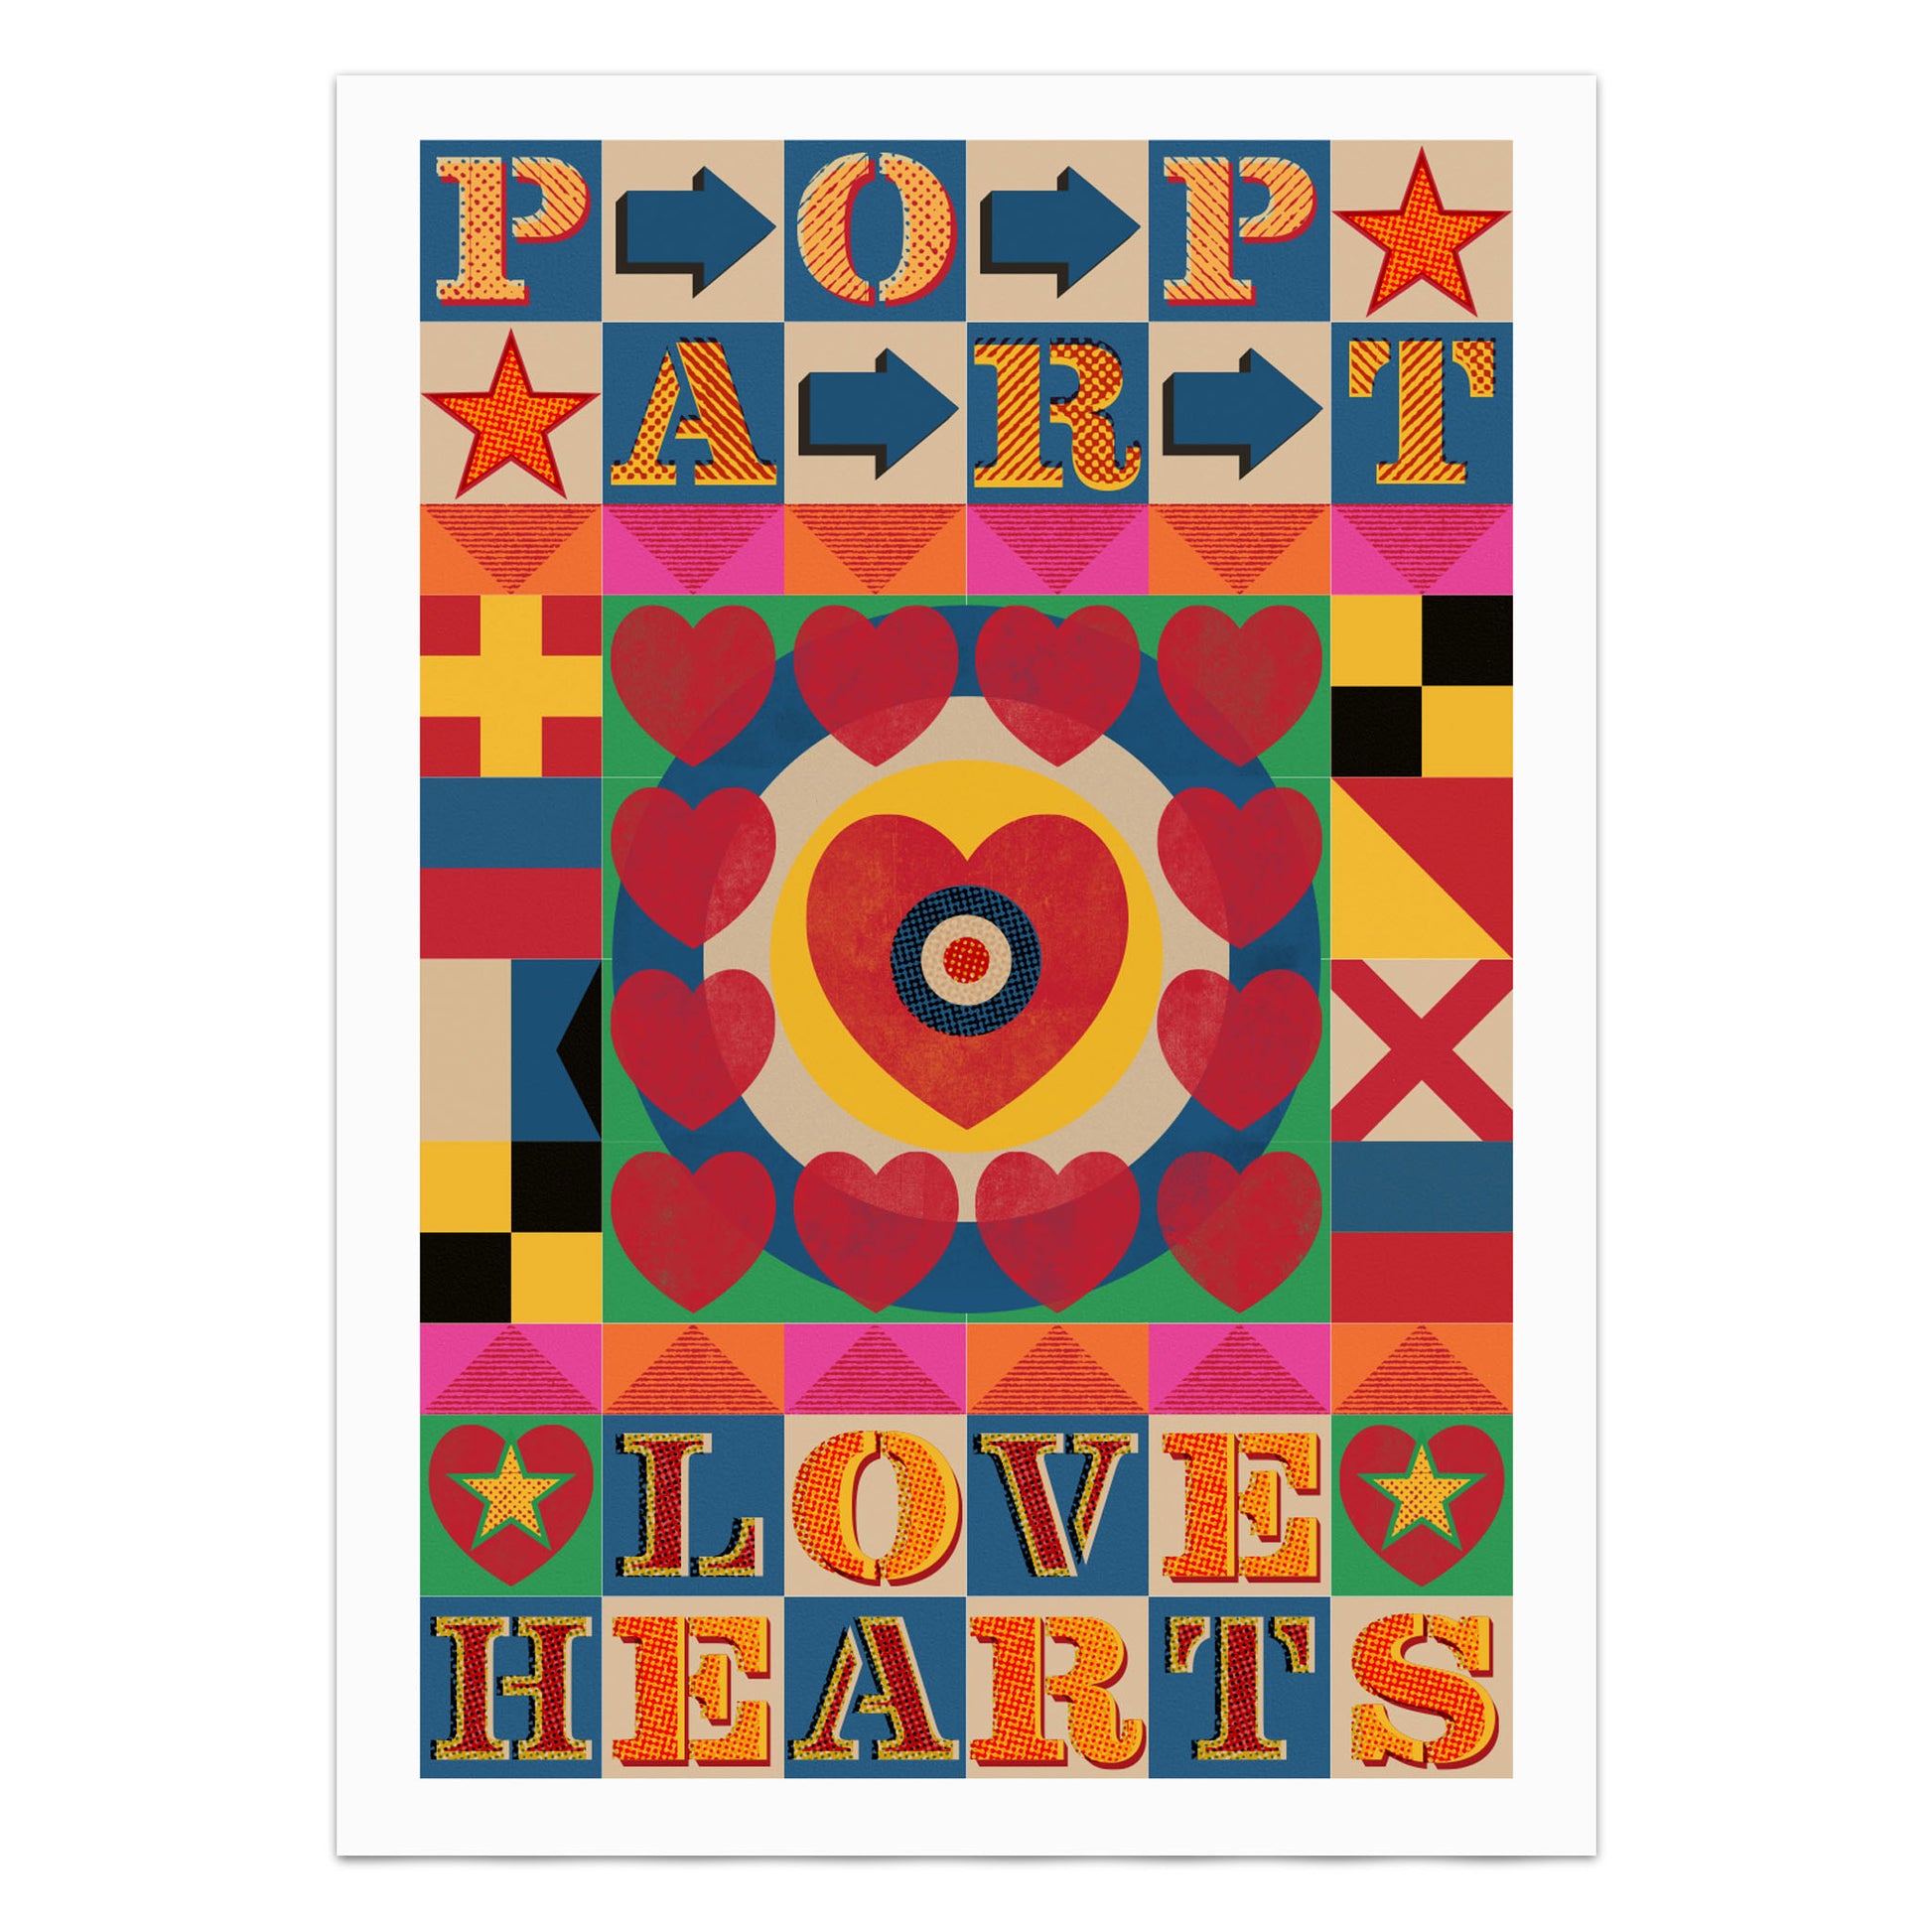 Pop Art Love Hearts Print